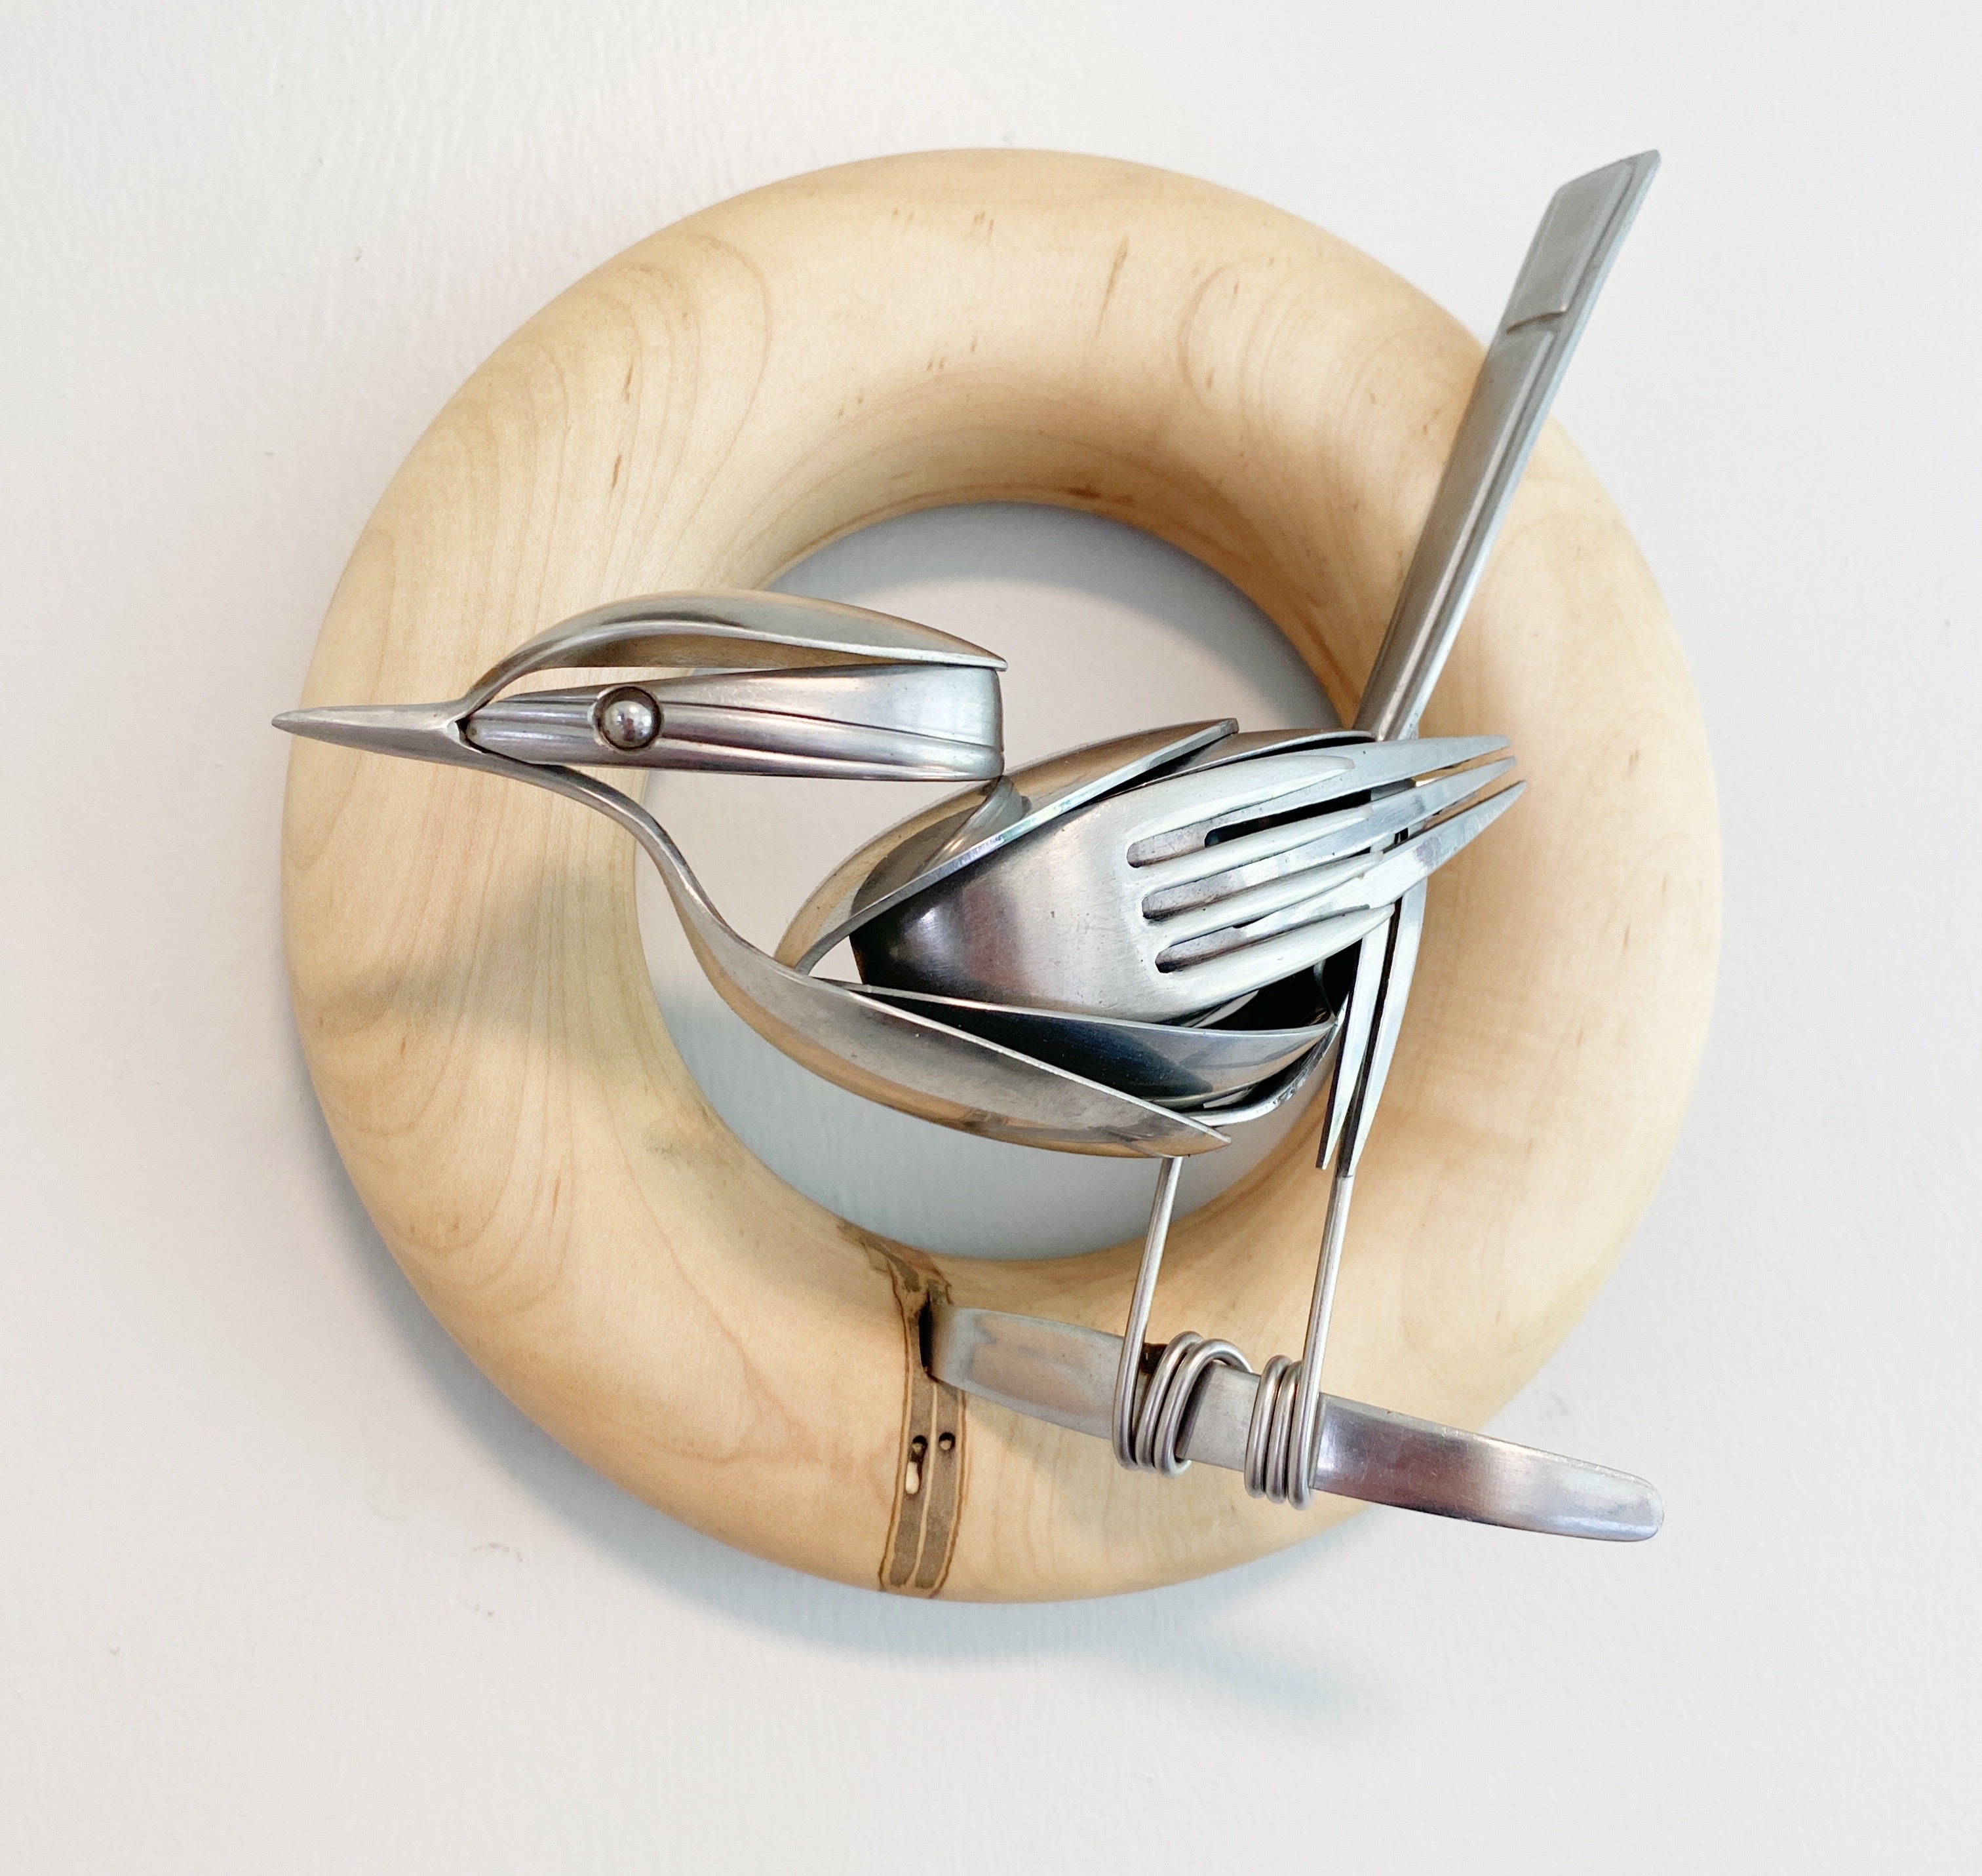 "Olin" - Upcycled Metal Bird Sculpture